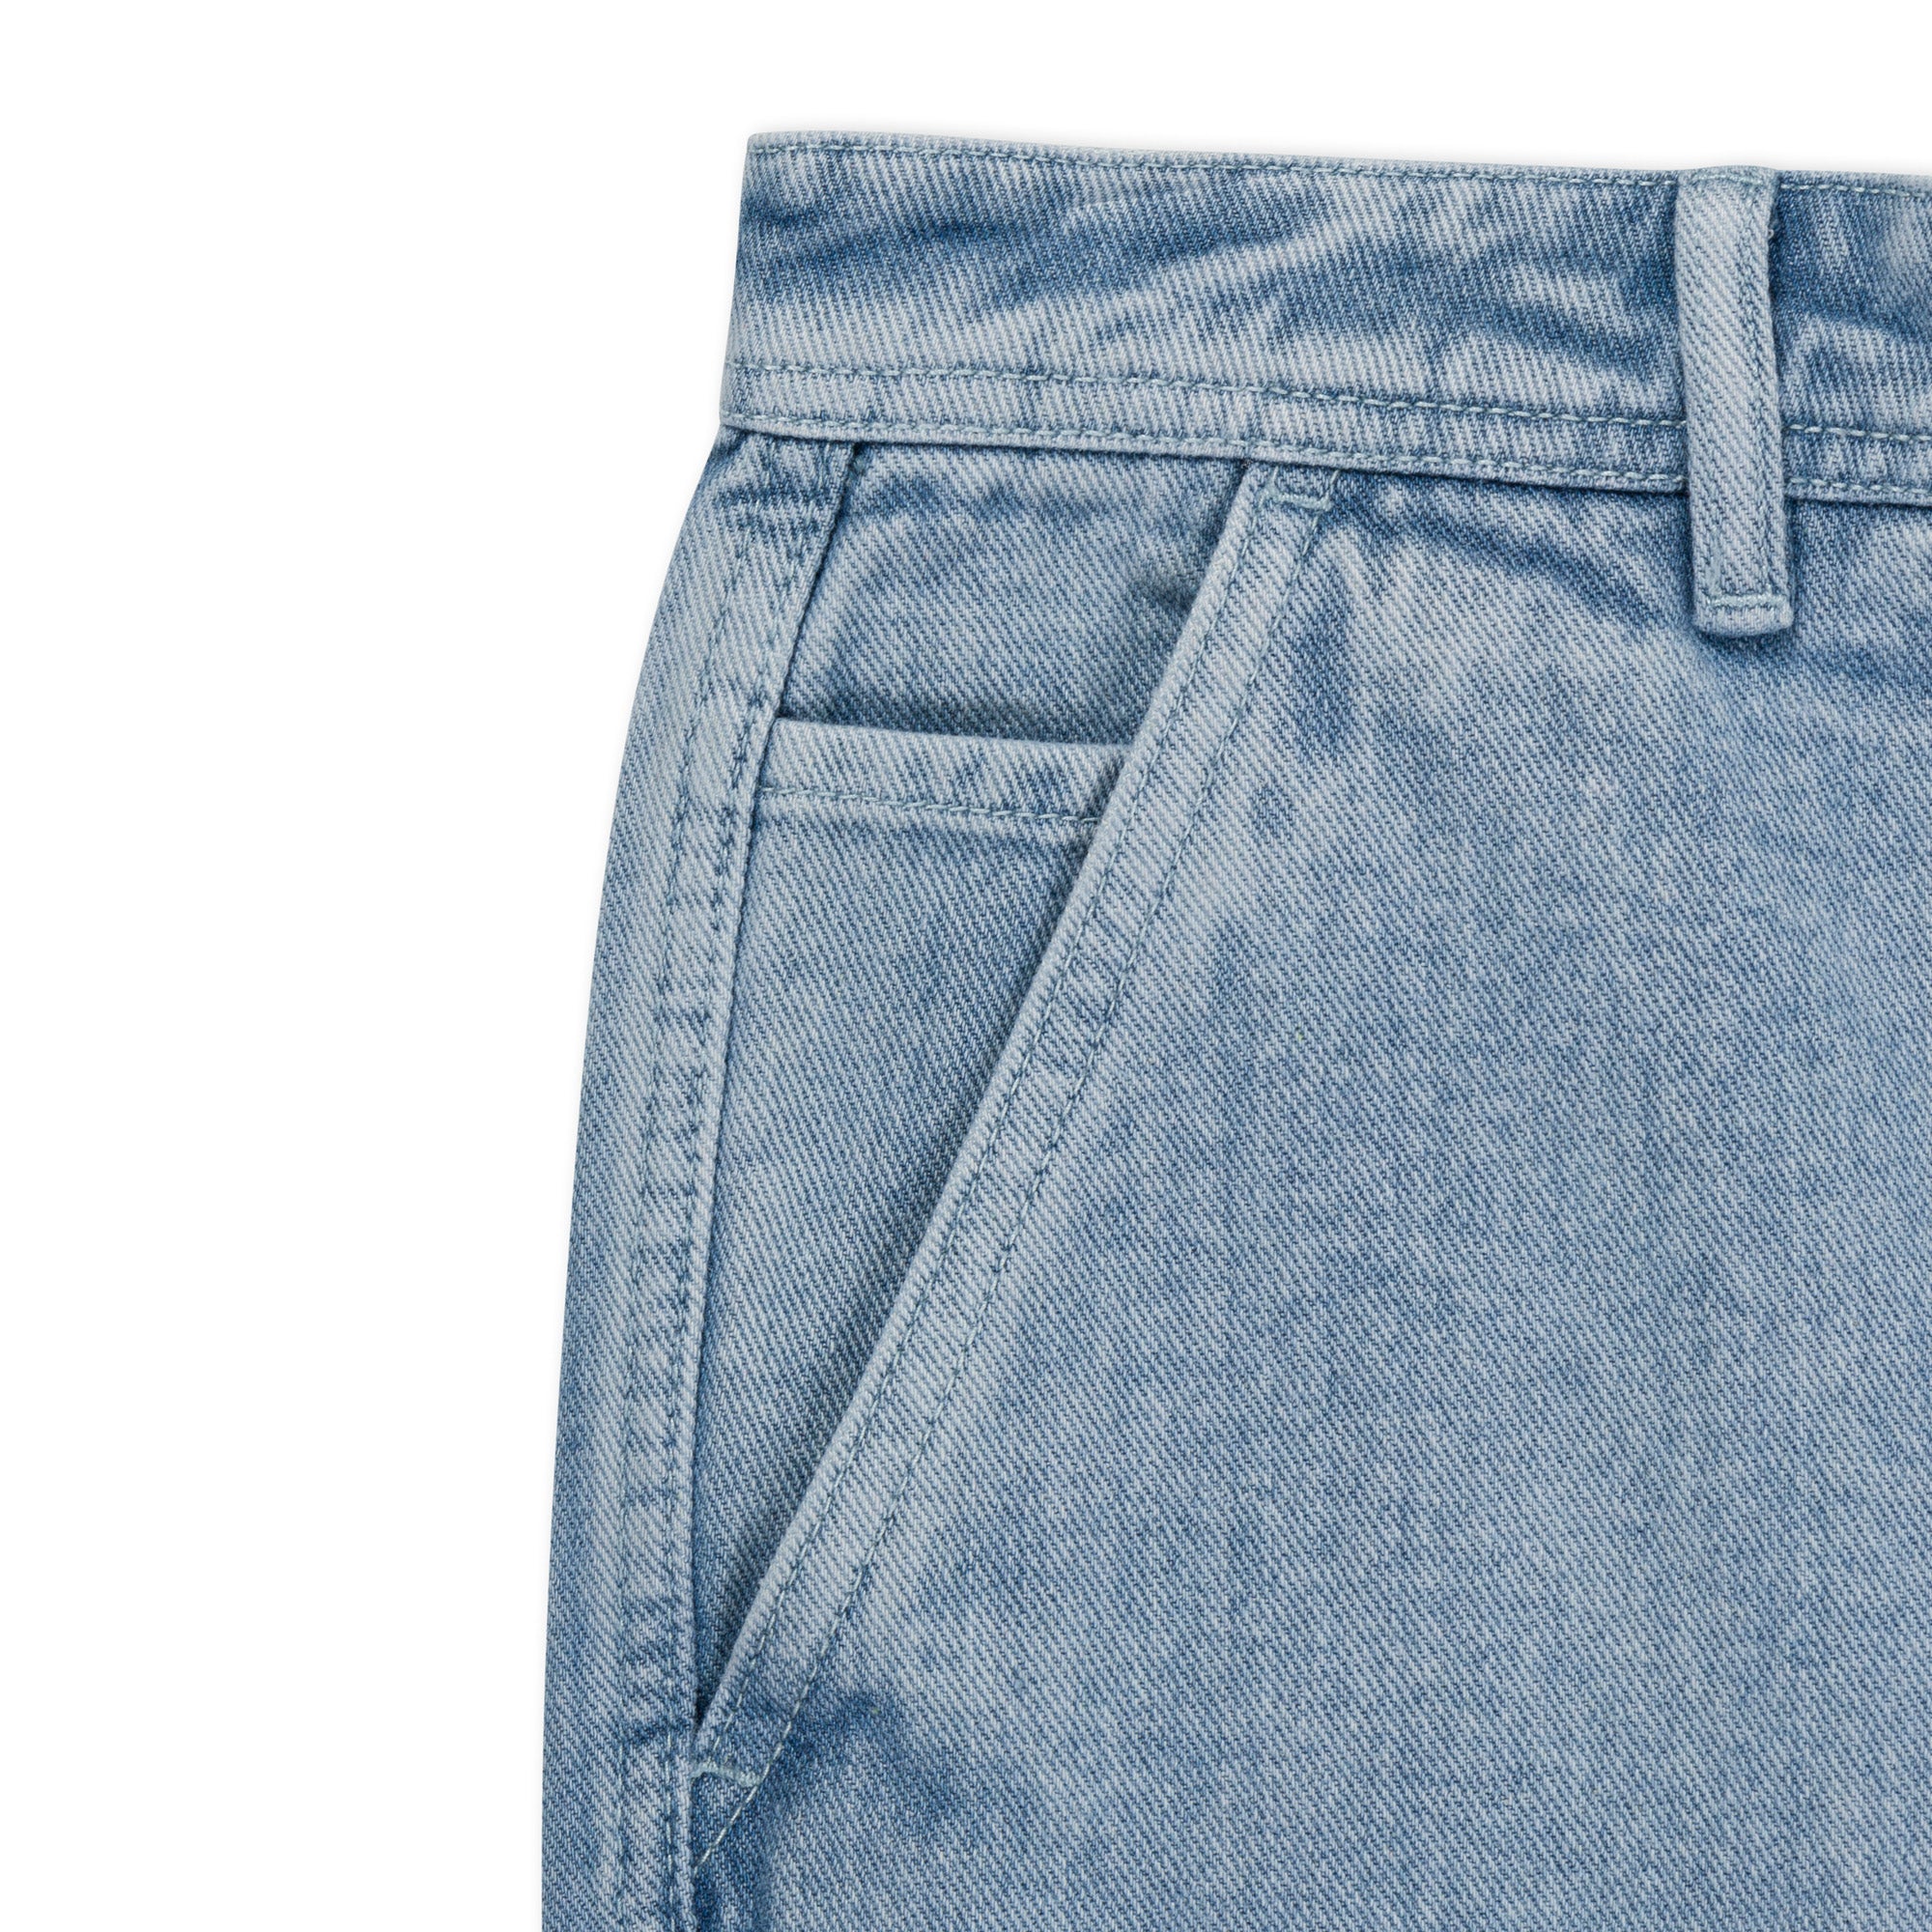 RIPNDIP Ranagram Denim Shorts (Medium Wash)